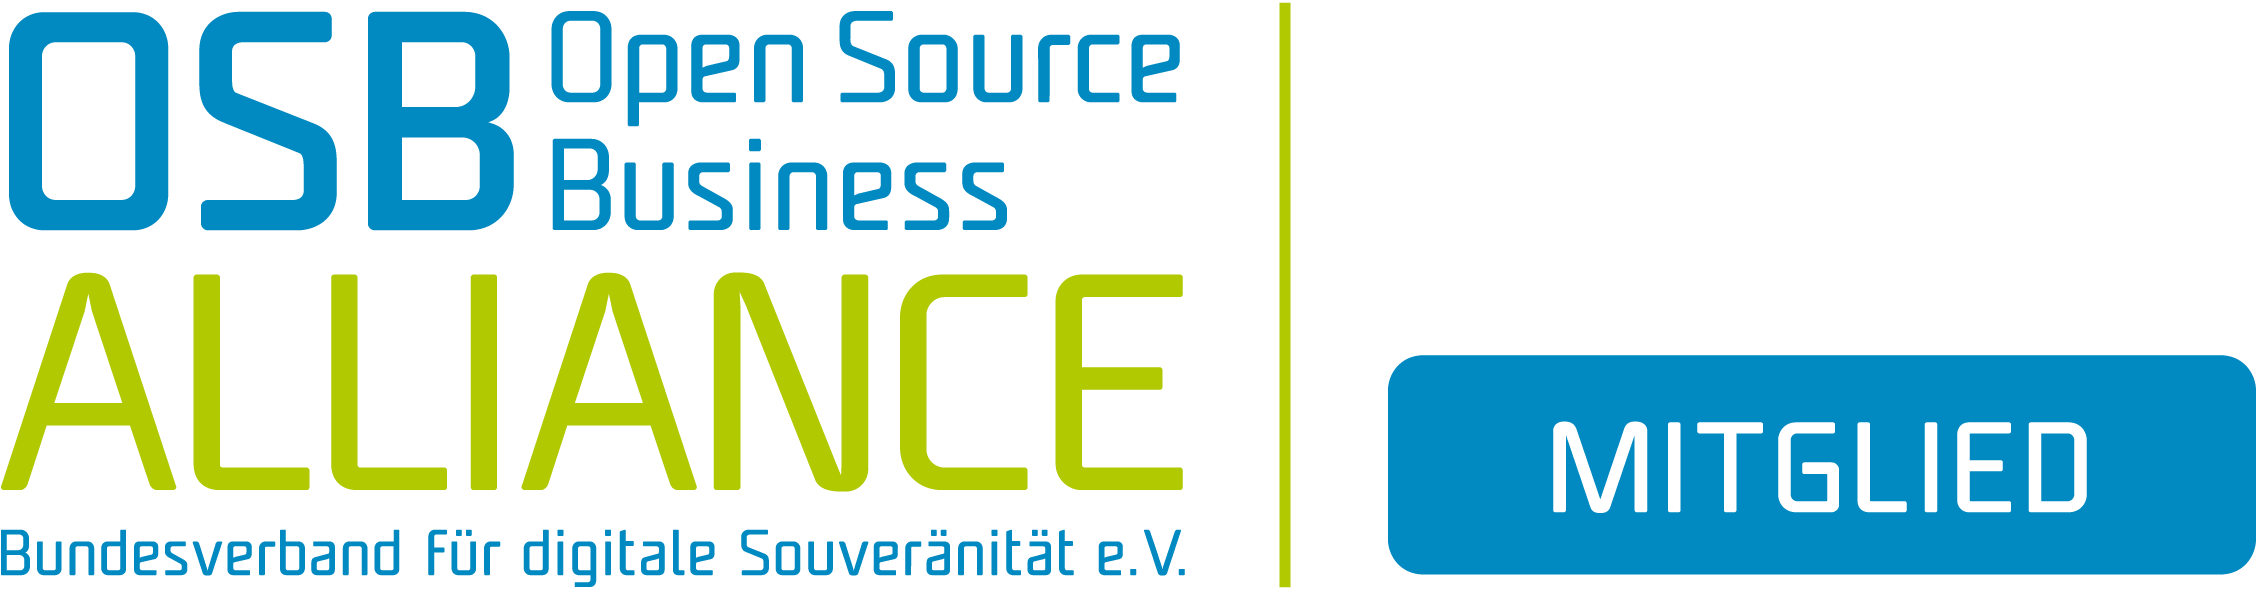 Open Source Business Alliance - Bundesverband für digitale Souveränität e.V.